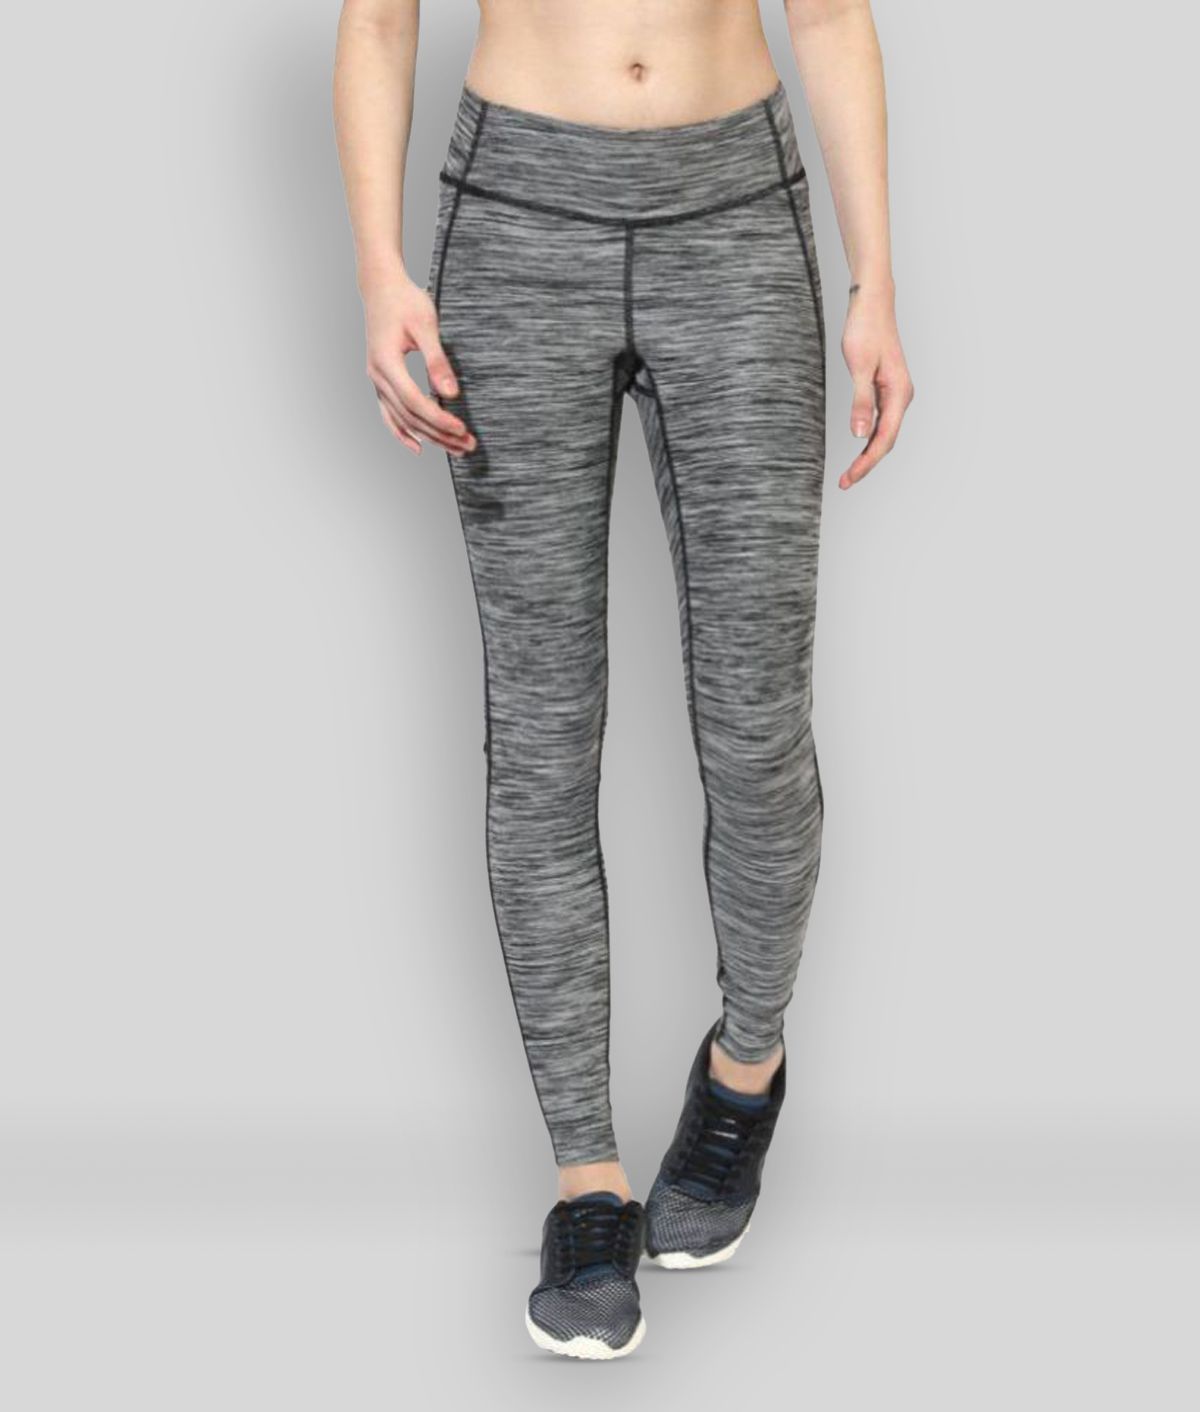 Zesteez W.omen Grey leggings ultra stretchable gym-workout leggings in premium Quality fabric ||  GYM || YOGA|| Active-wear || Sportswear|| Running